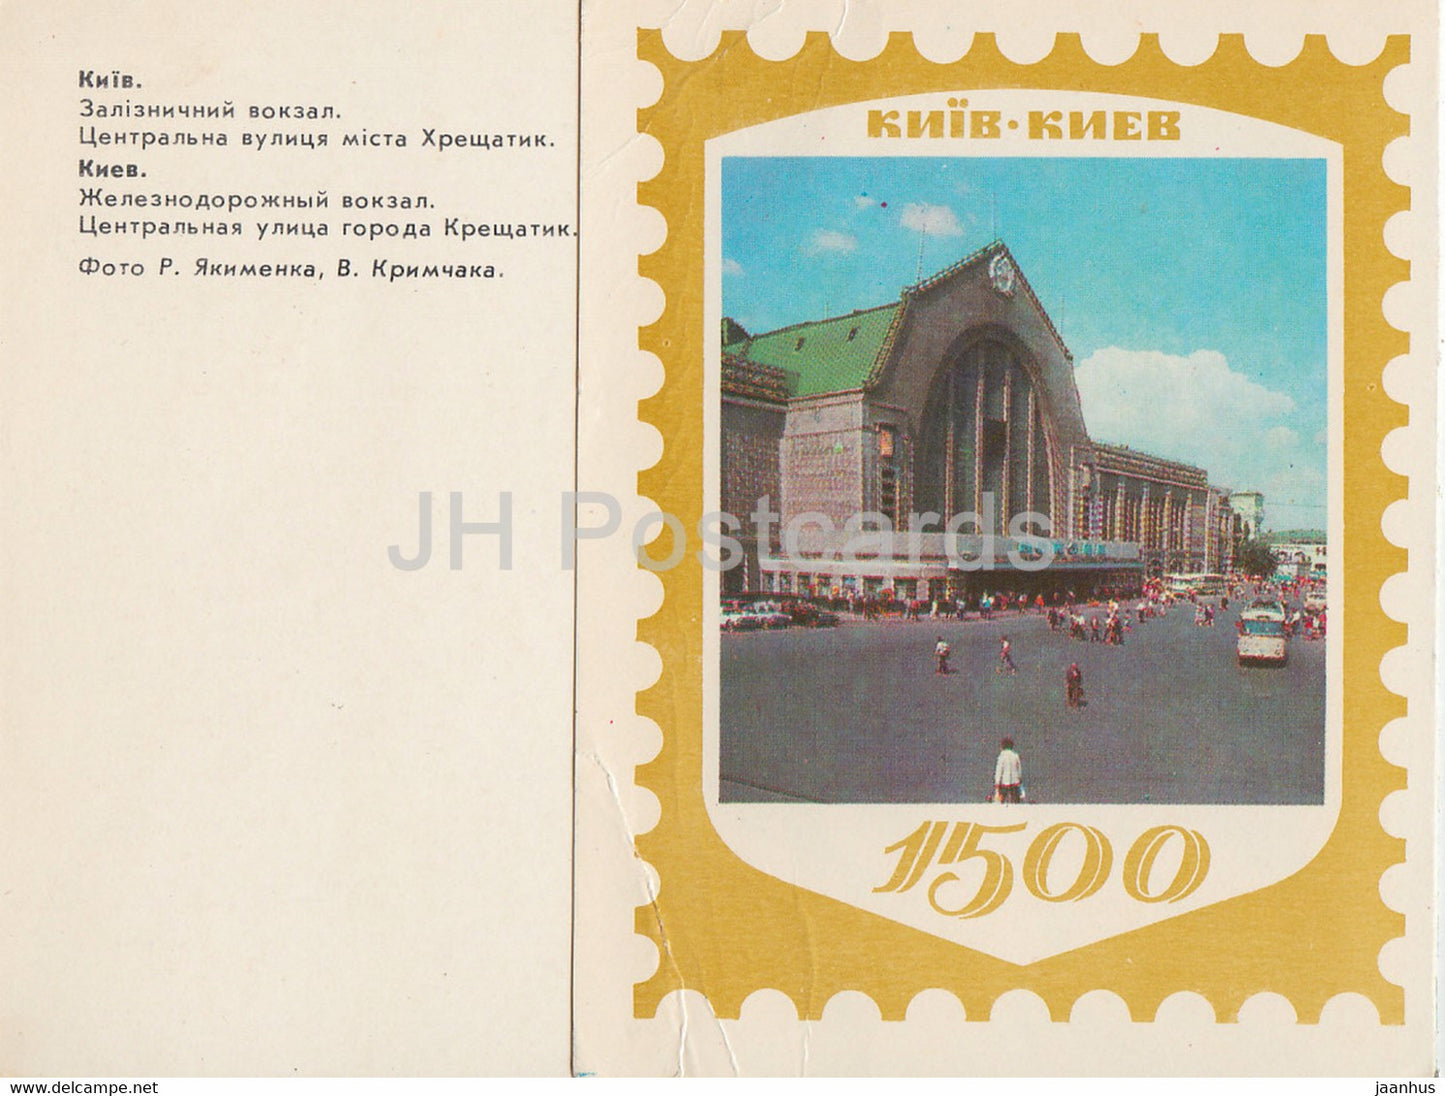 Kyiv - Kiev - railway station - central street - tram - Khreshchatyk - 1983 - Ukraine USSR - used